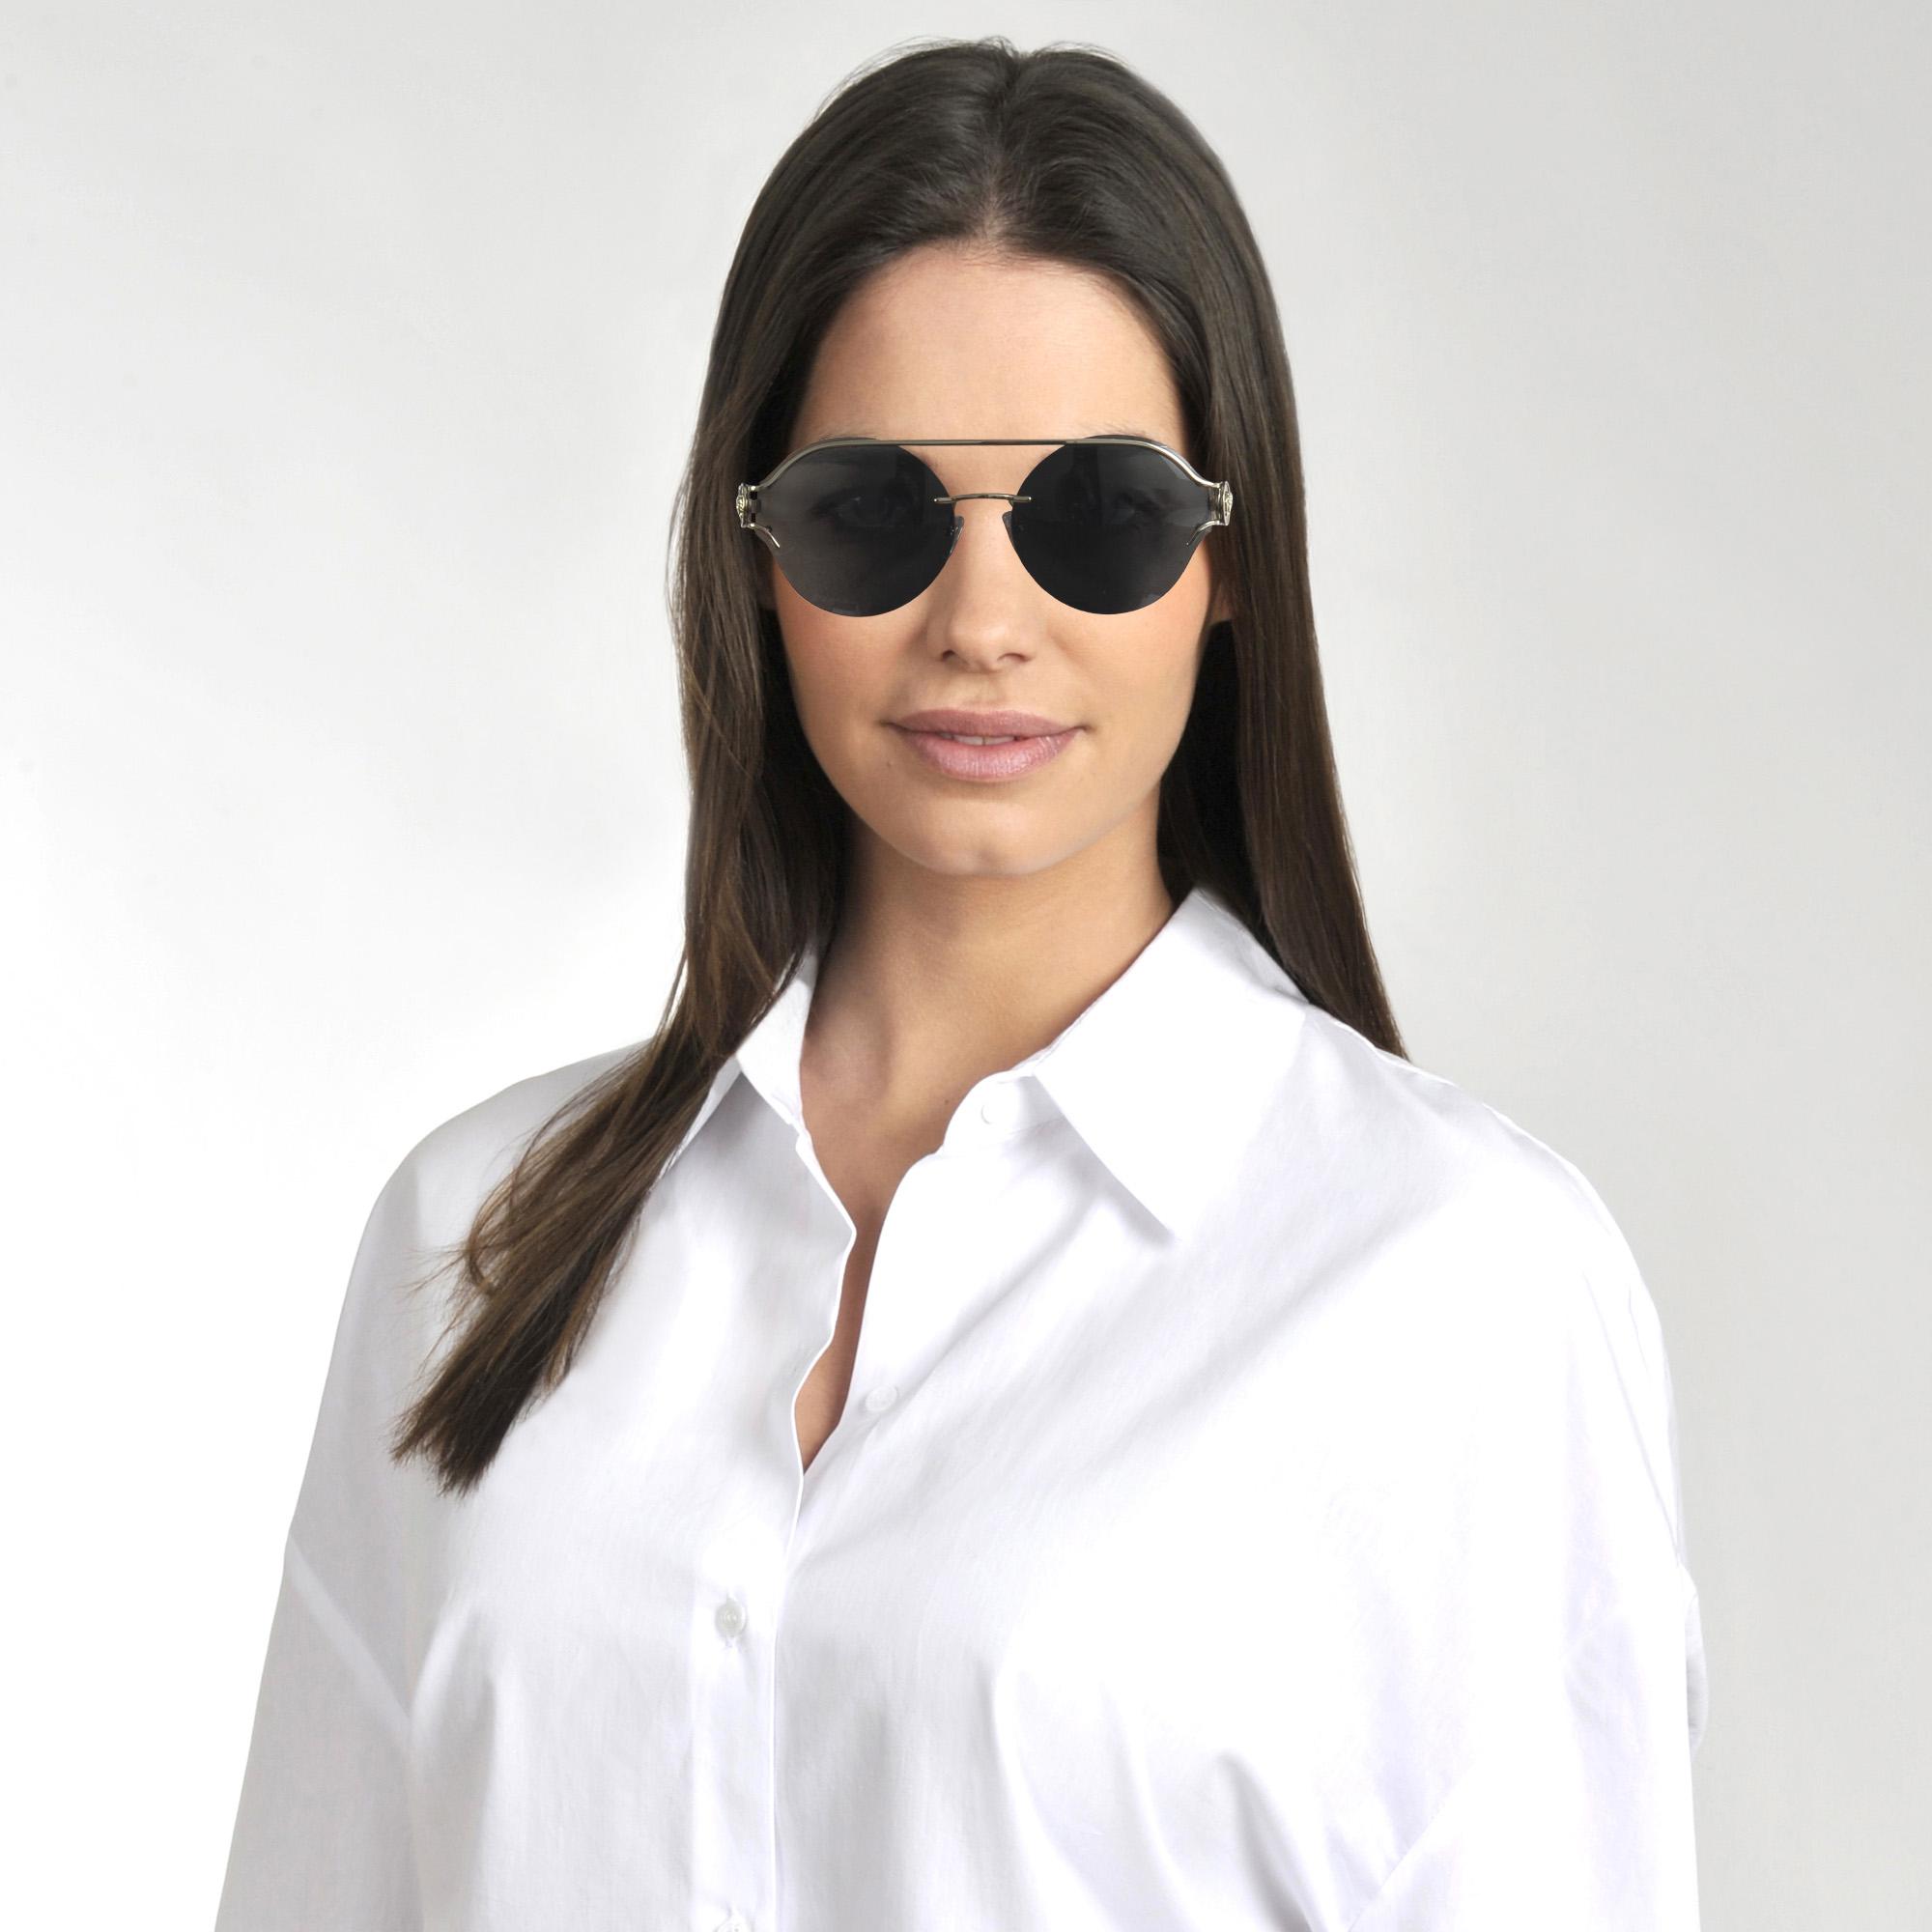 versace v powerful sunglasses